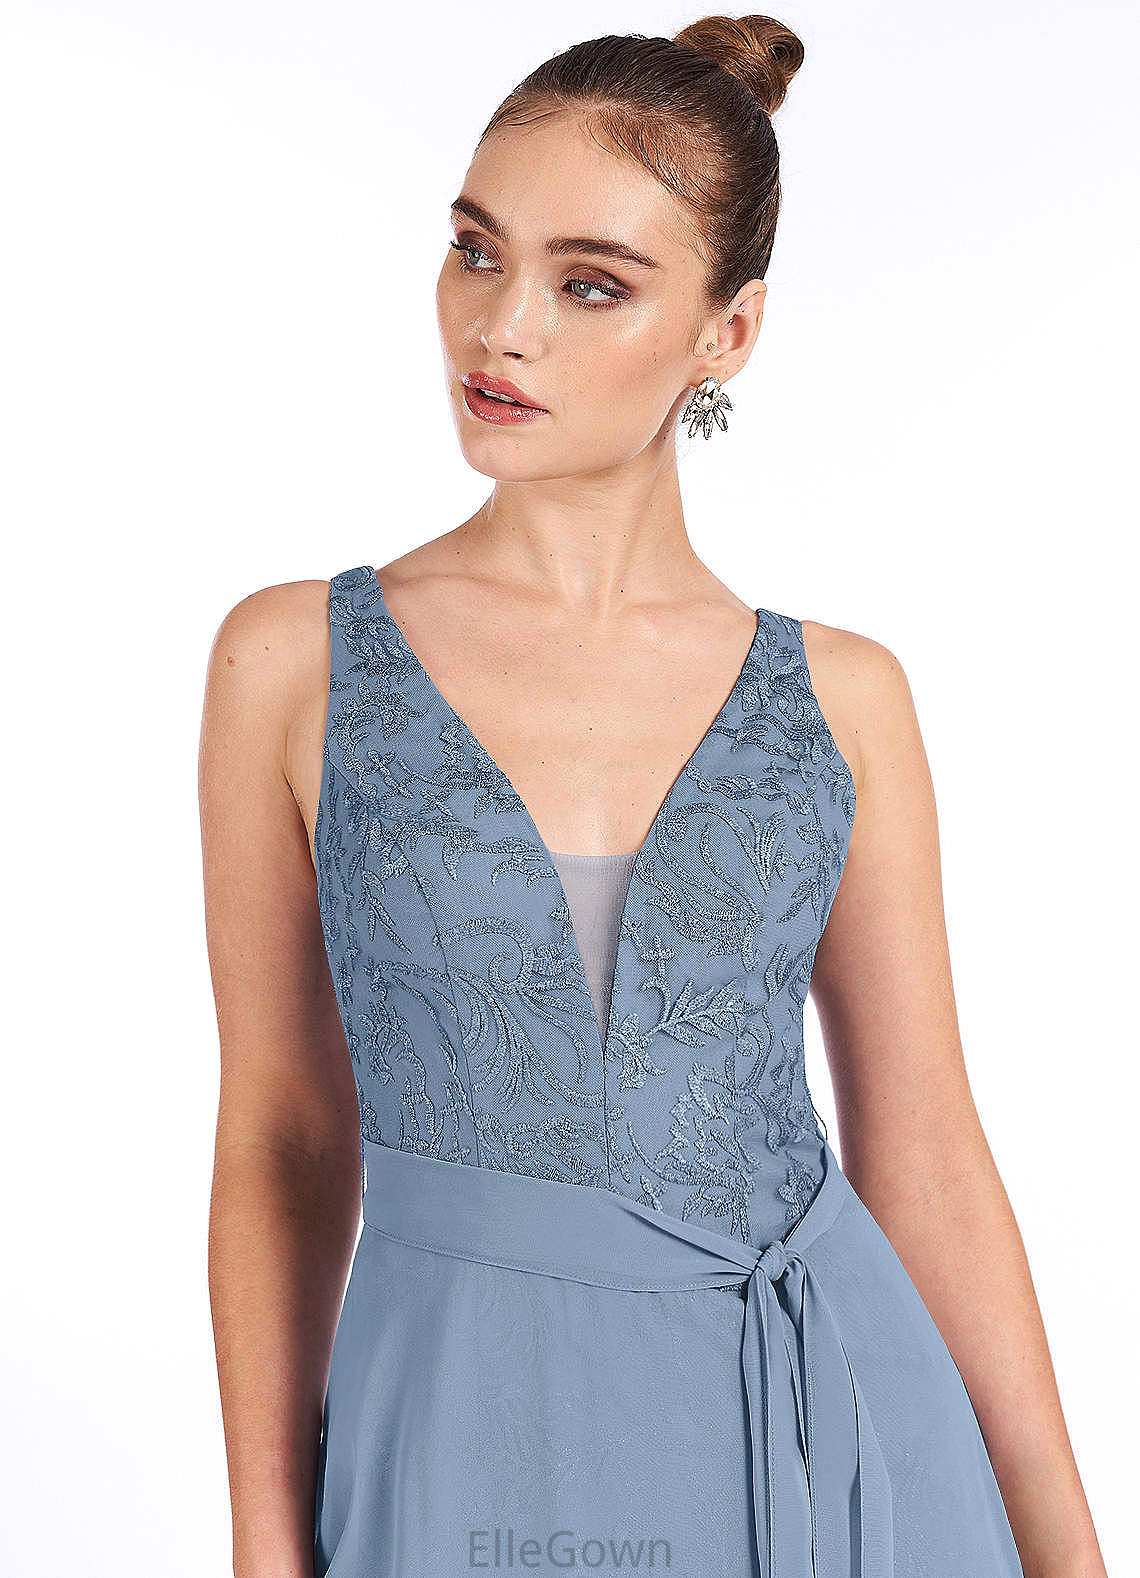 Rhianna A-Line/Princess Spaghetti Staps Natural Waist Sleeveless Floor Length Bridesmaid Dresses